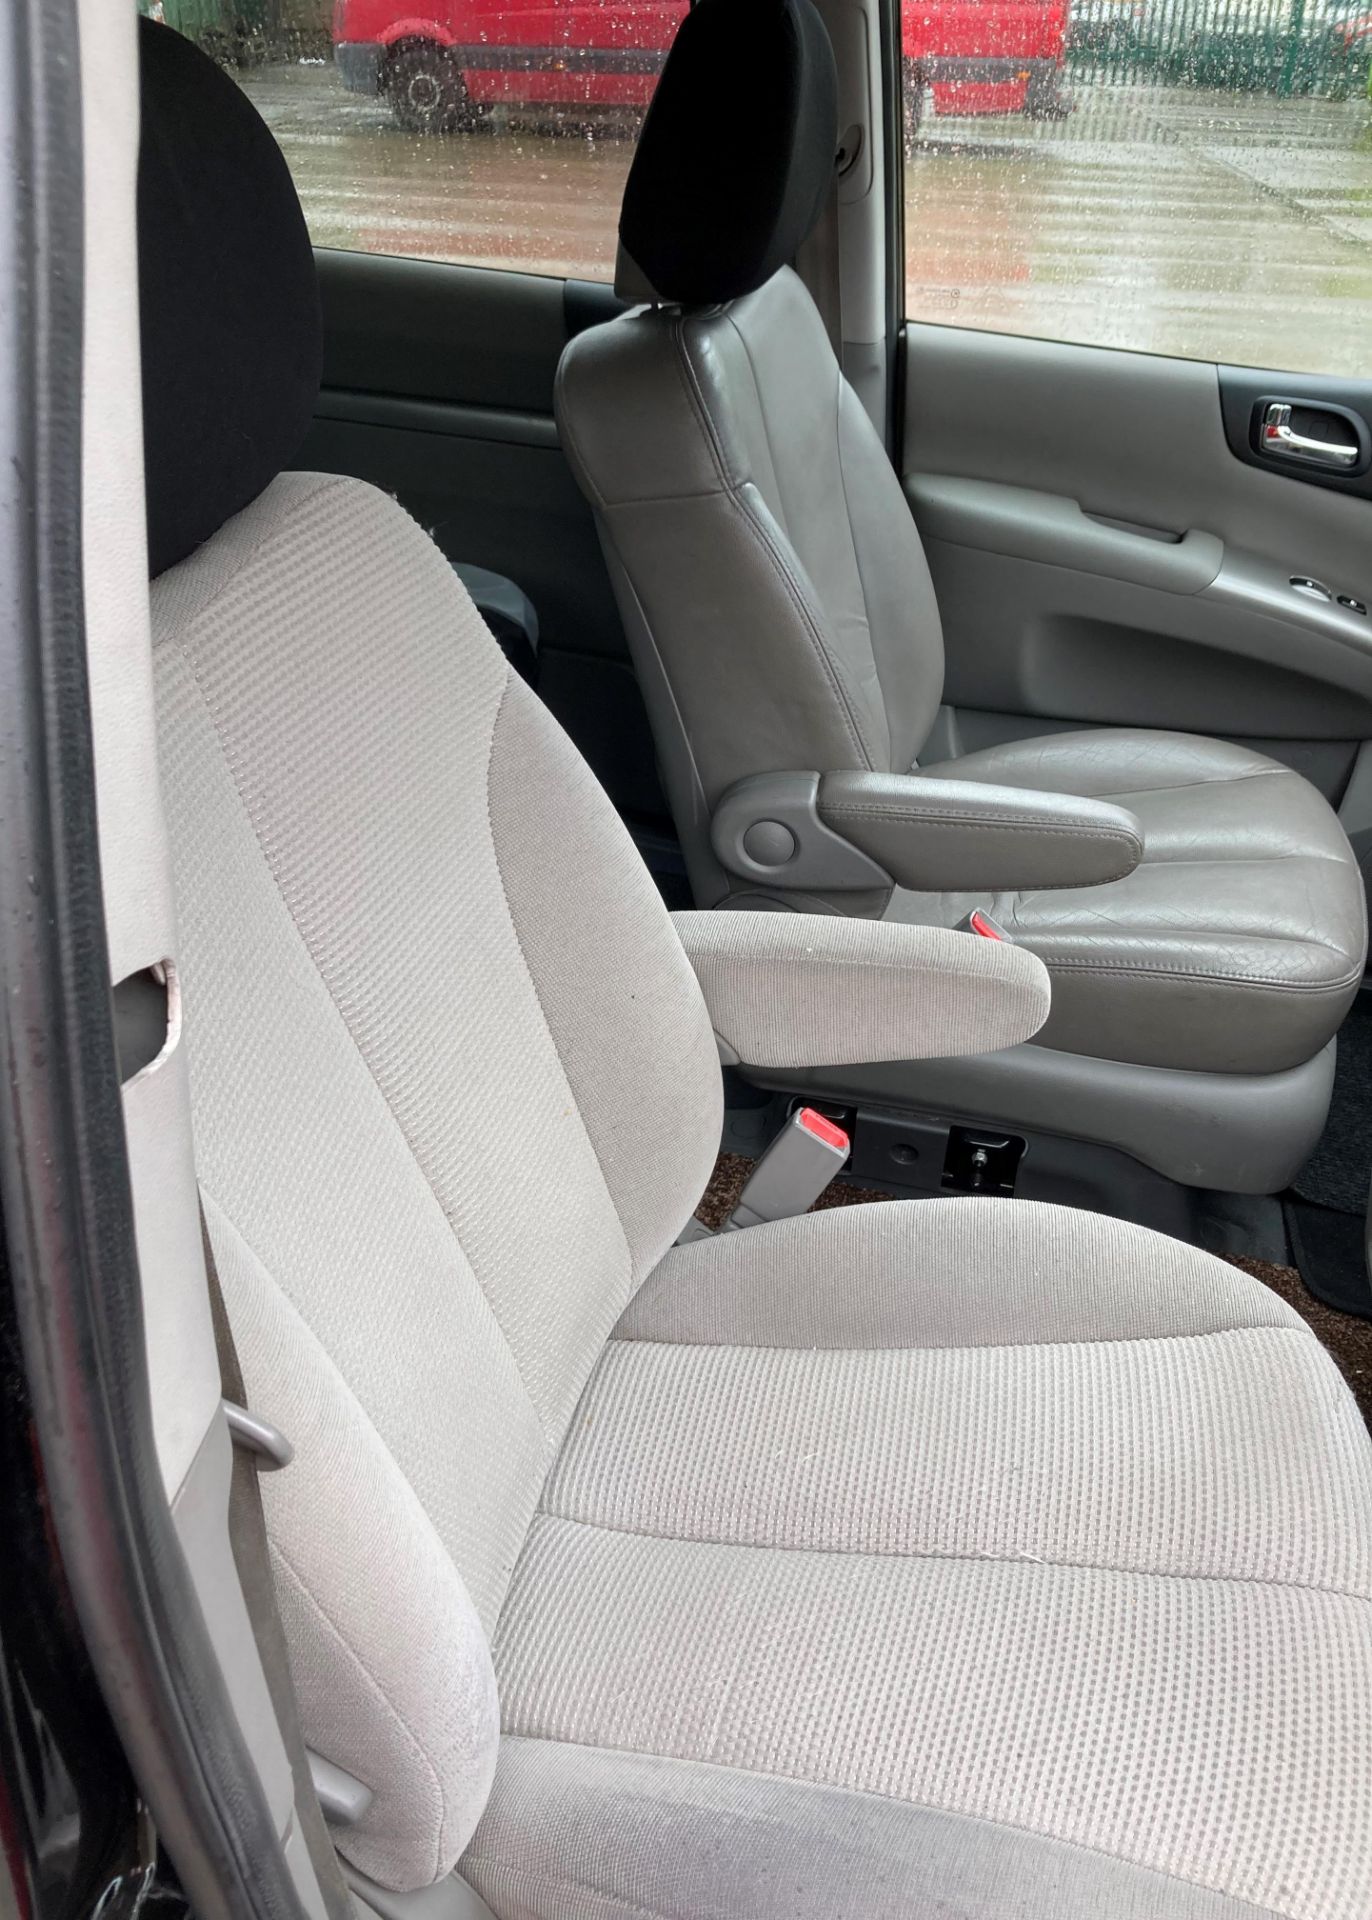 KIA SEDONA 3 CRDi AUTO MPV - Diesel - Black - Passenger seat dark grey leather, - Image 14 of 22